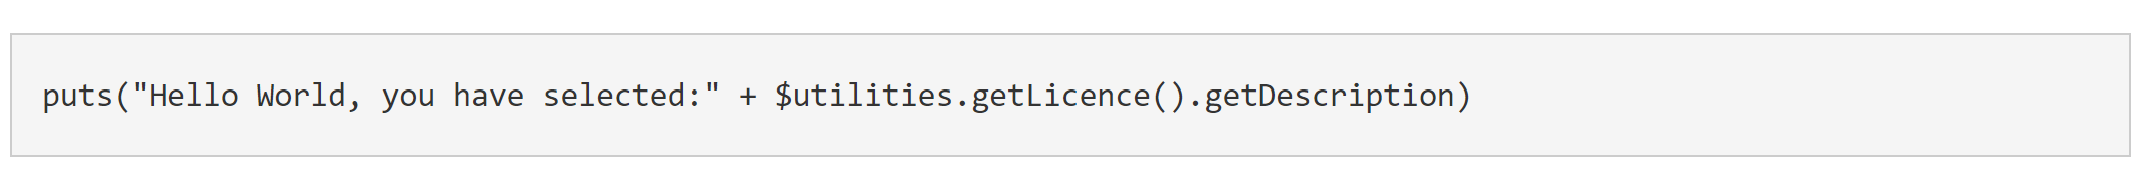 Run command: puts("Hello World, you have selected:" + $utilities.getLicence().getDescription)